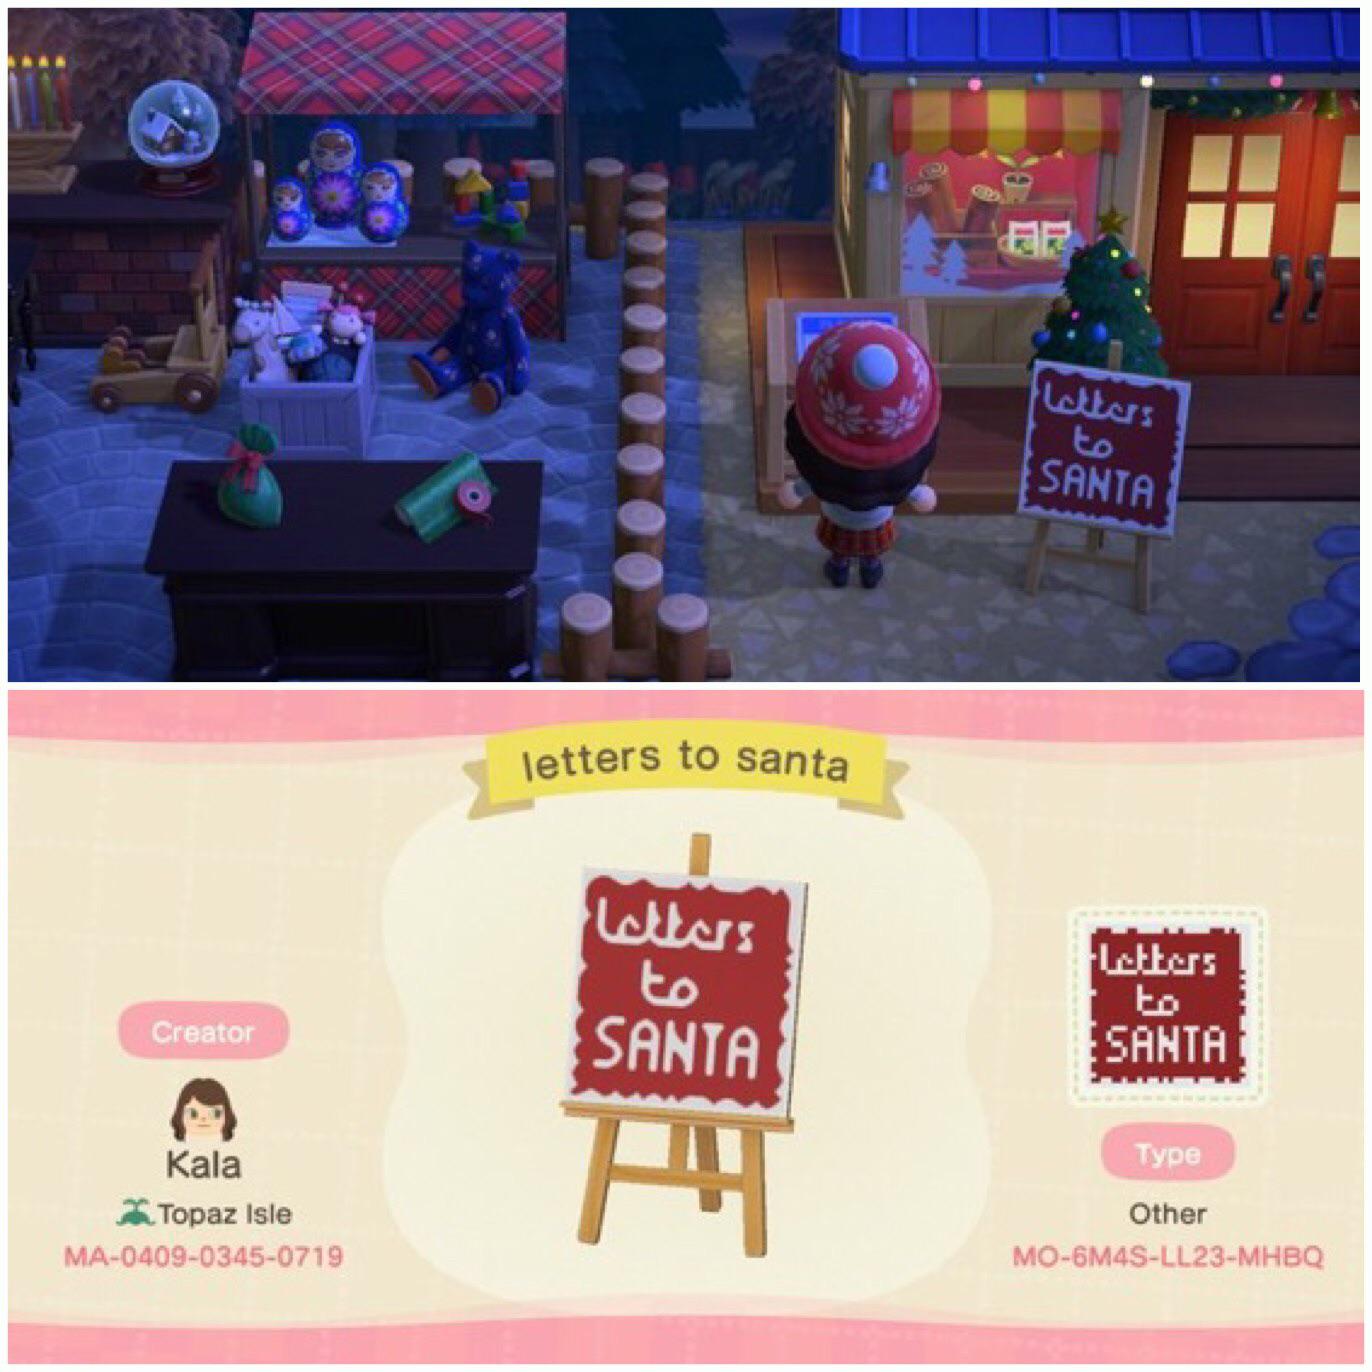 Animal Crossing Made the dropbox into Santas mailbox Hope he